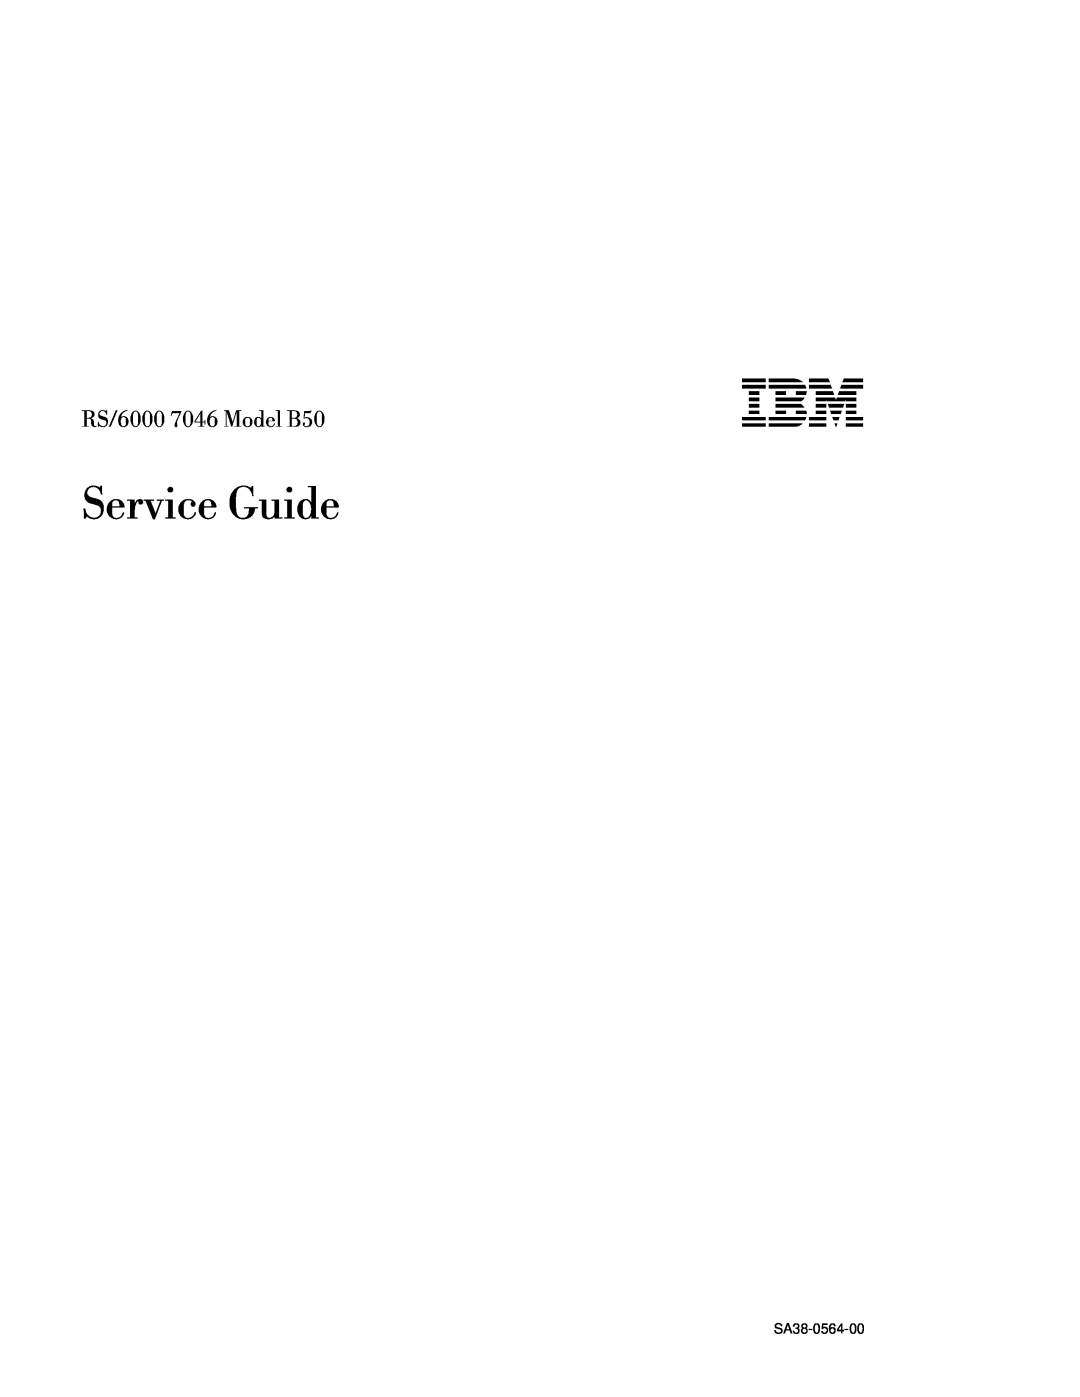 IBM manual Service Guide, RS/6000 7046 Model B50 